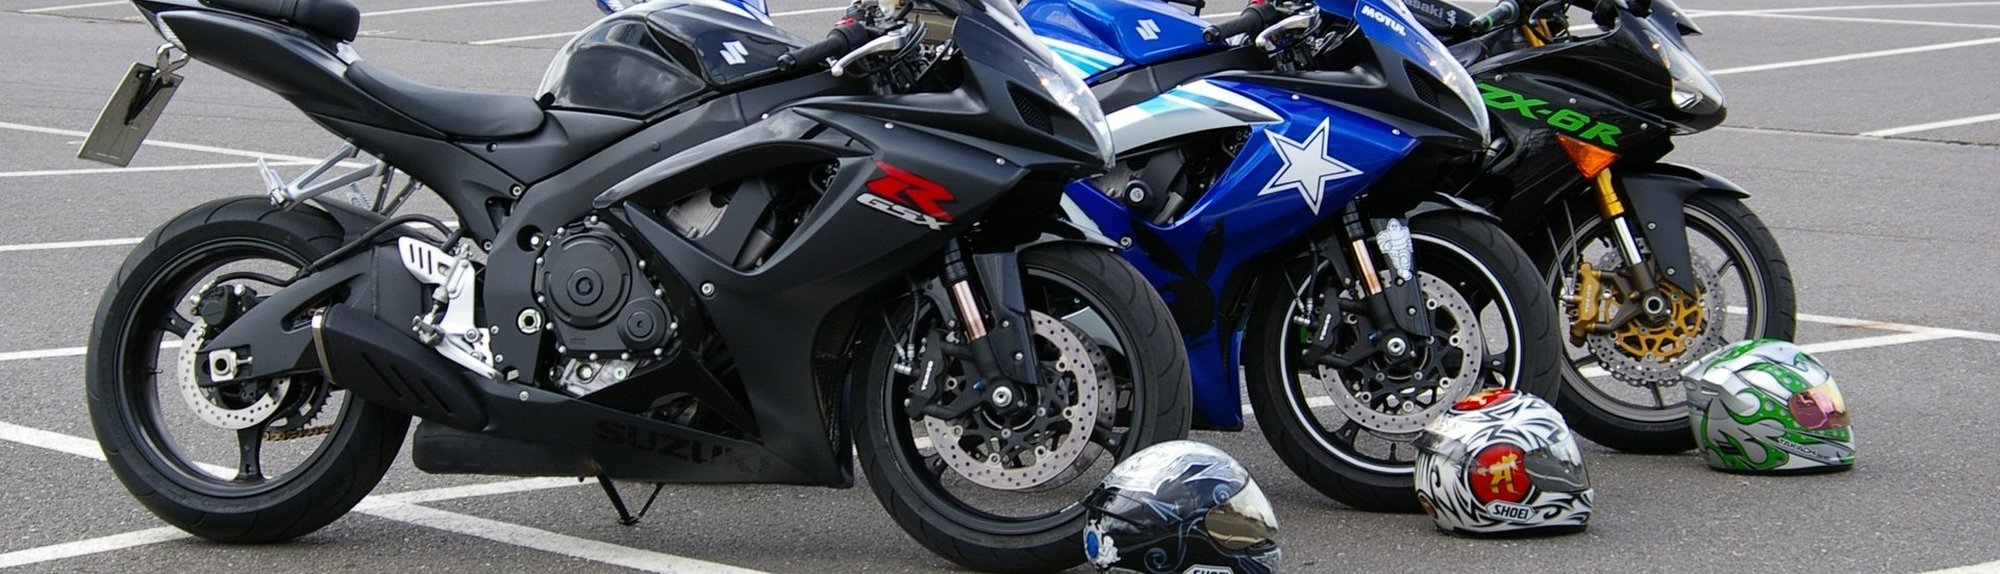 Palazzi Motos - Oficial Yamaha - Honda - Motomel